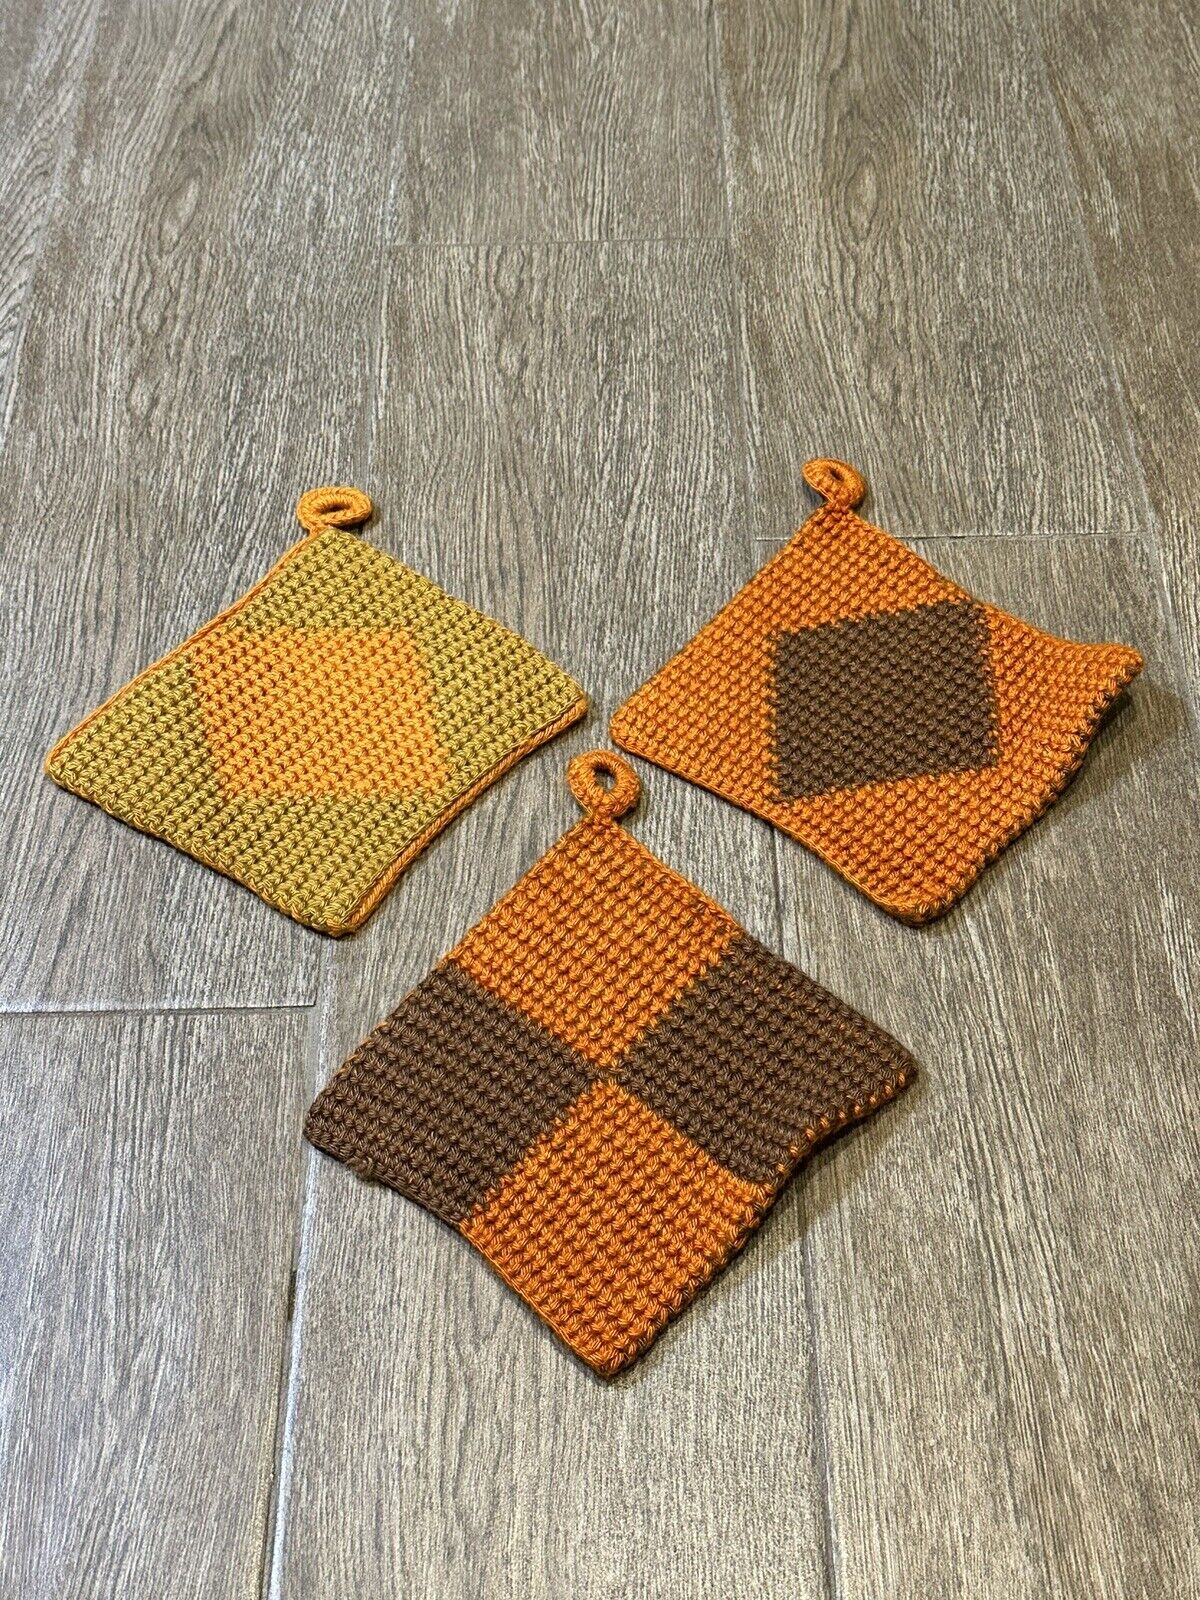 Lot of  3 Vintage Crocheted Potholders Trivets Thick Double Retro Orange Brown